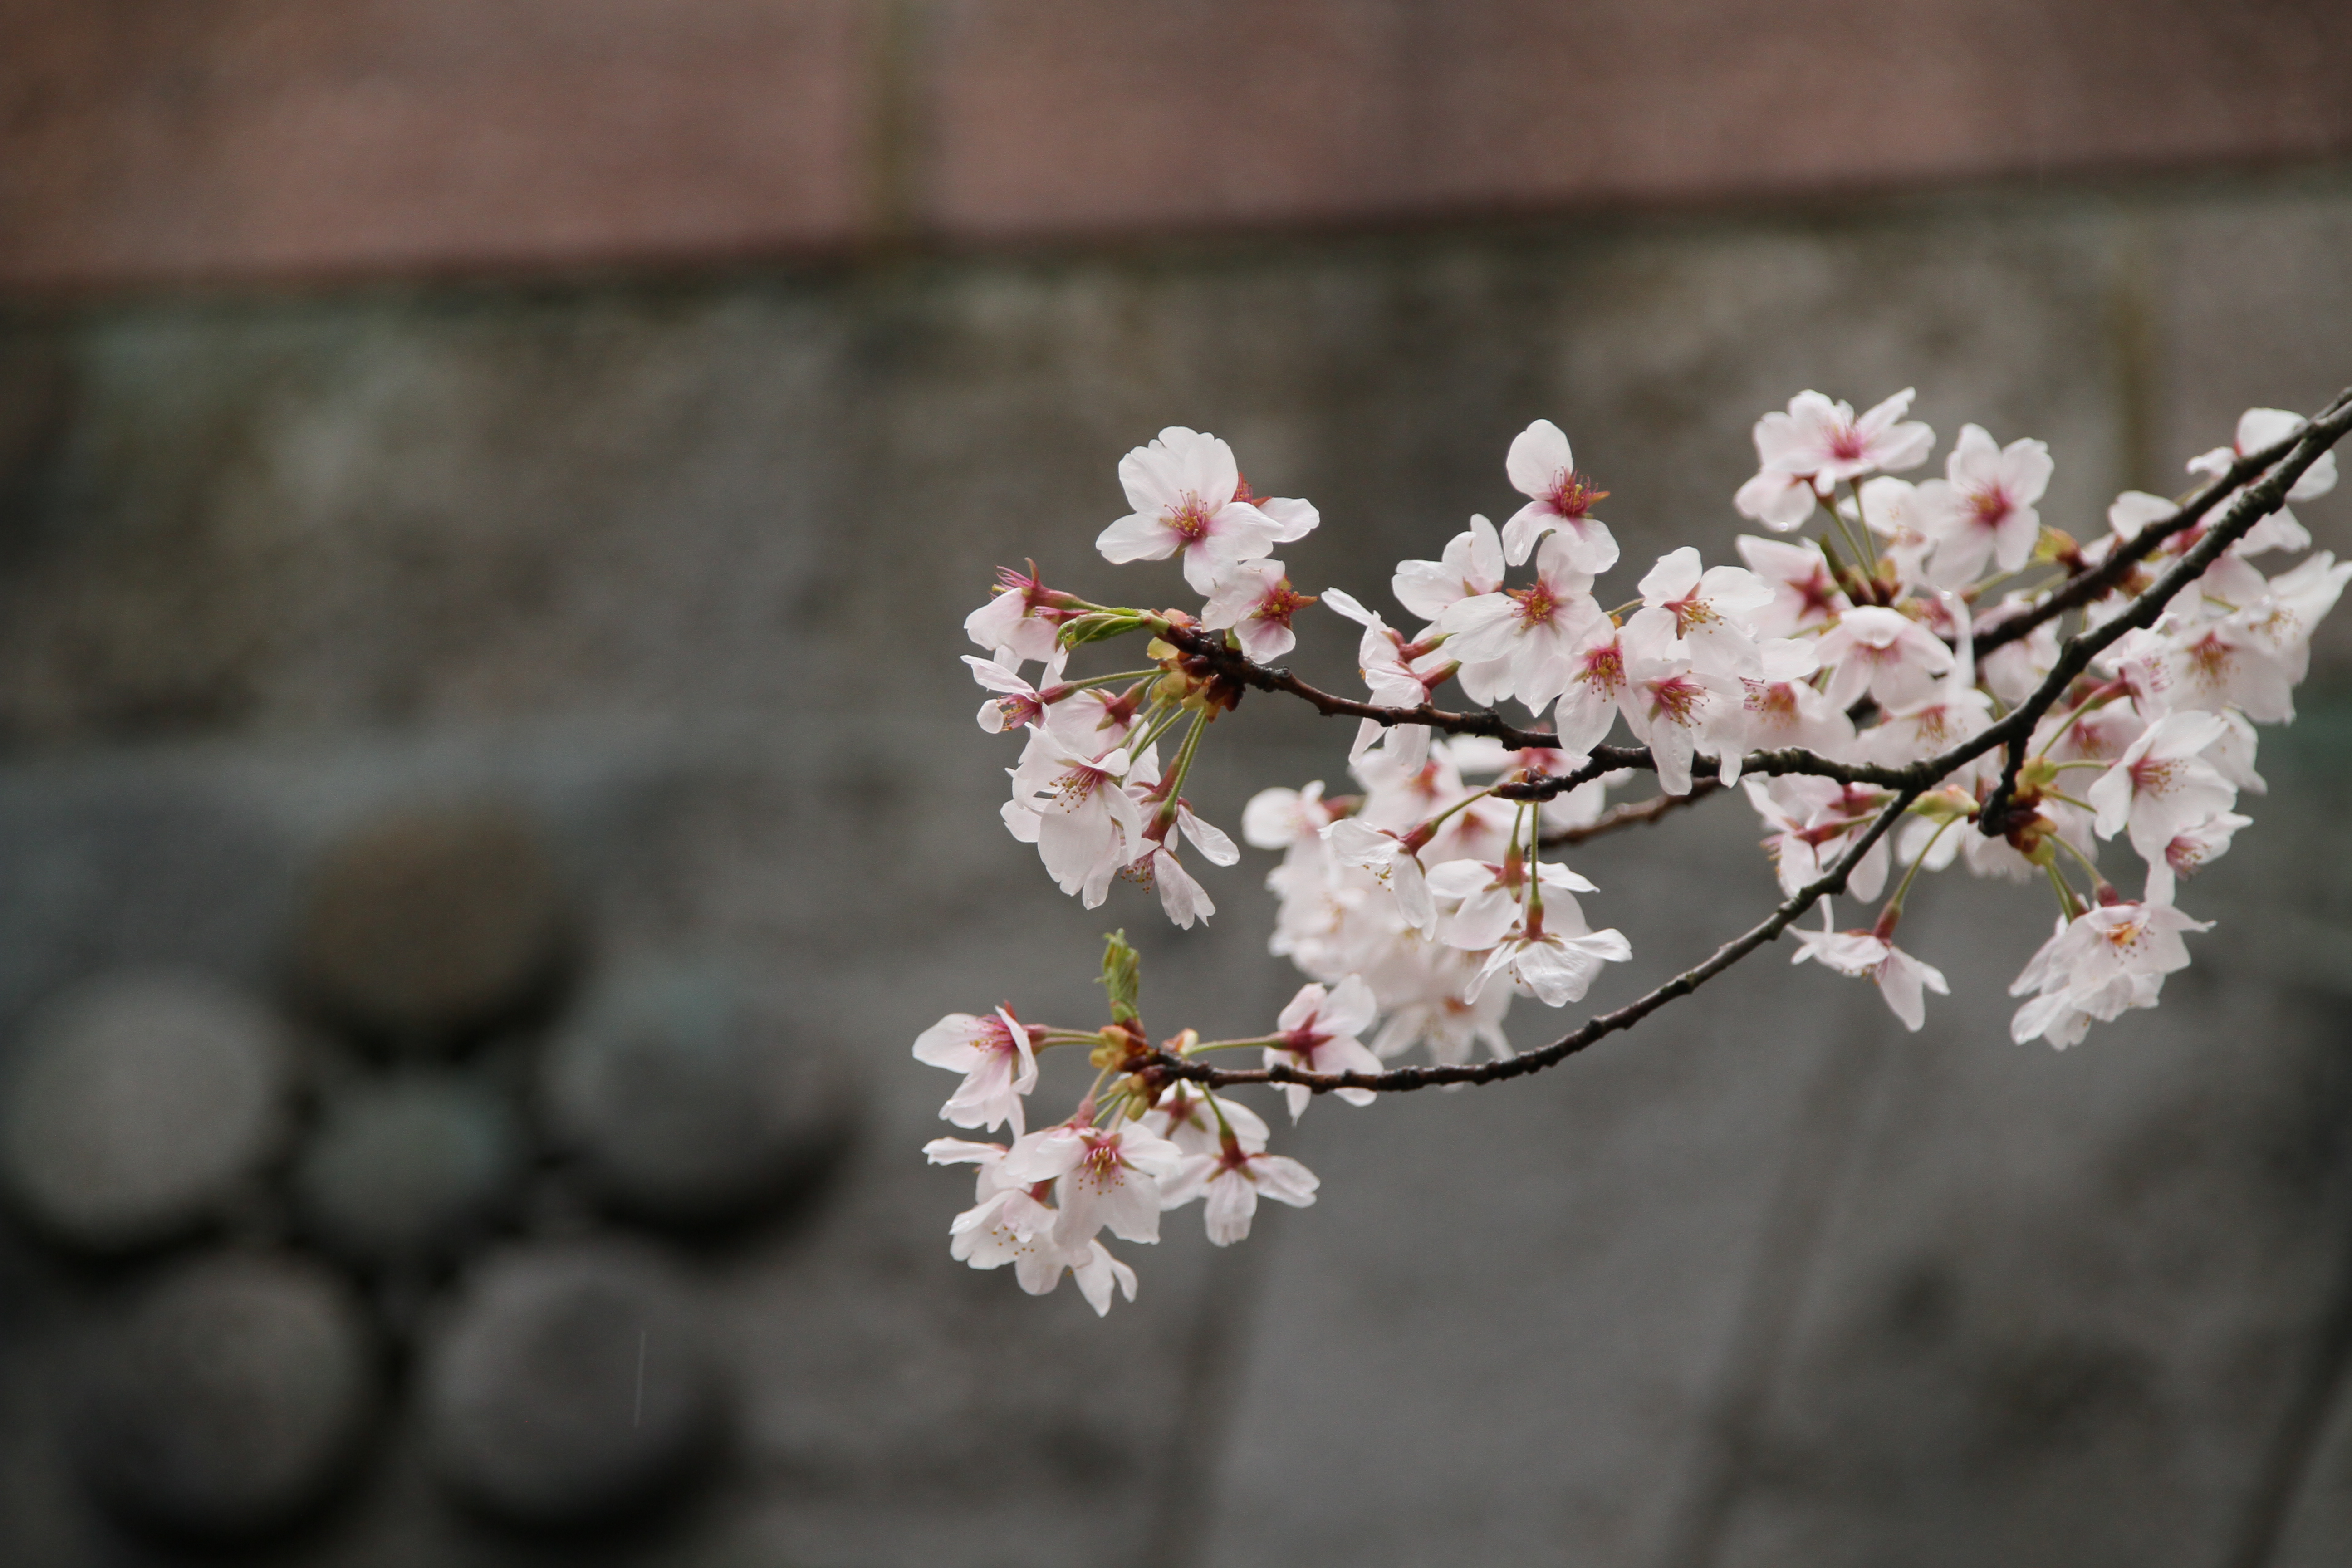 Japanese Cherry Blossom Spring Merch